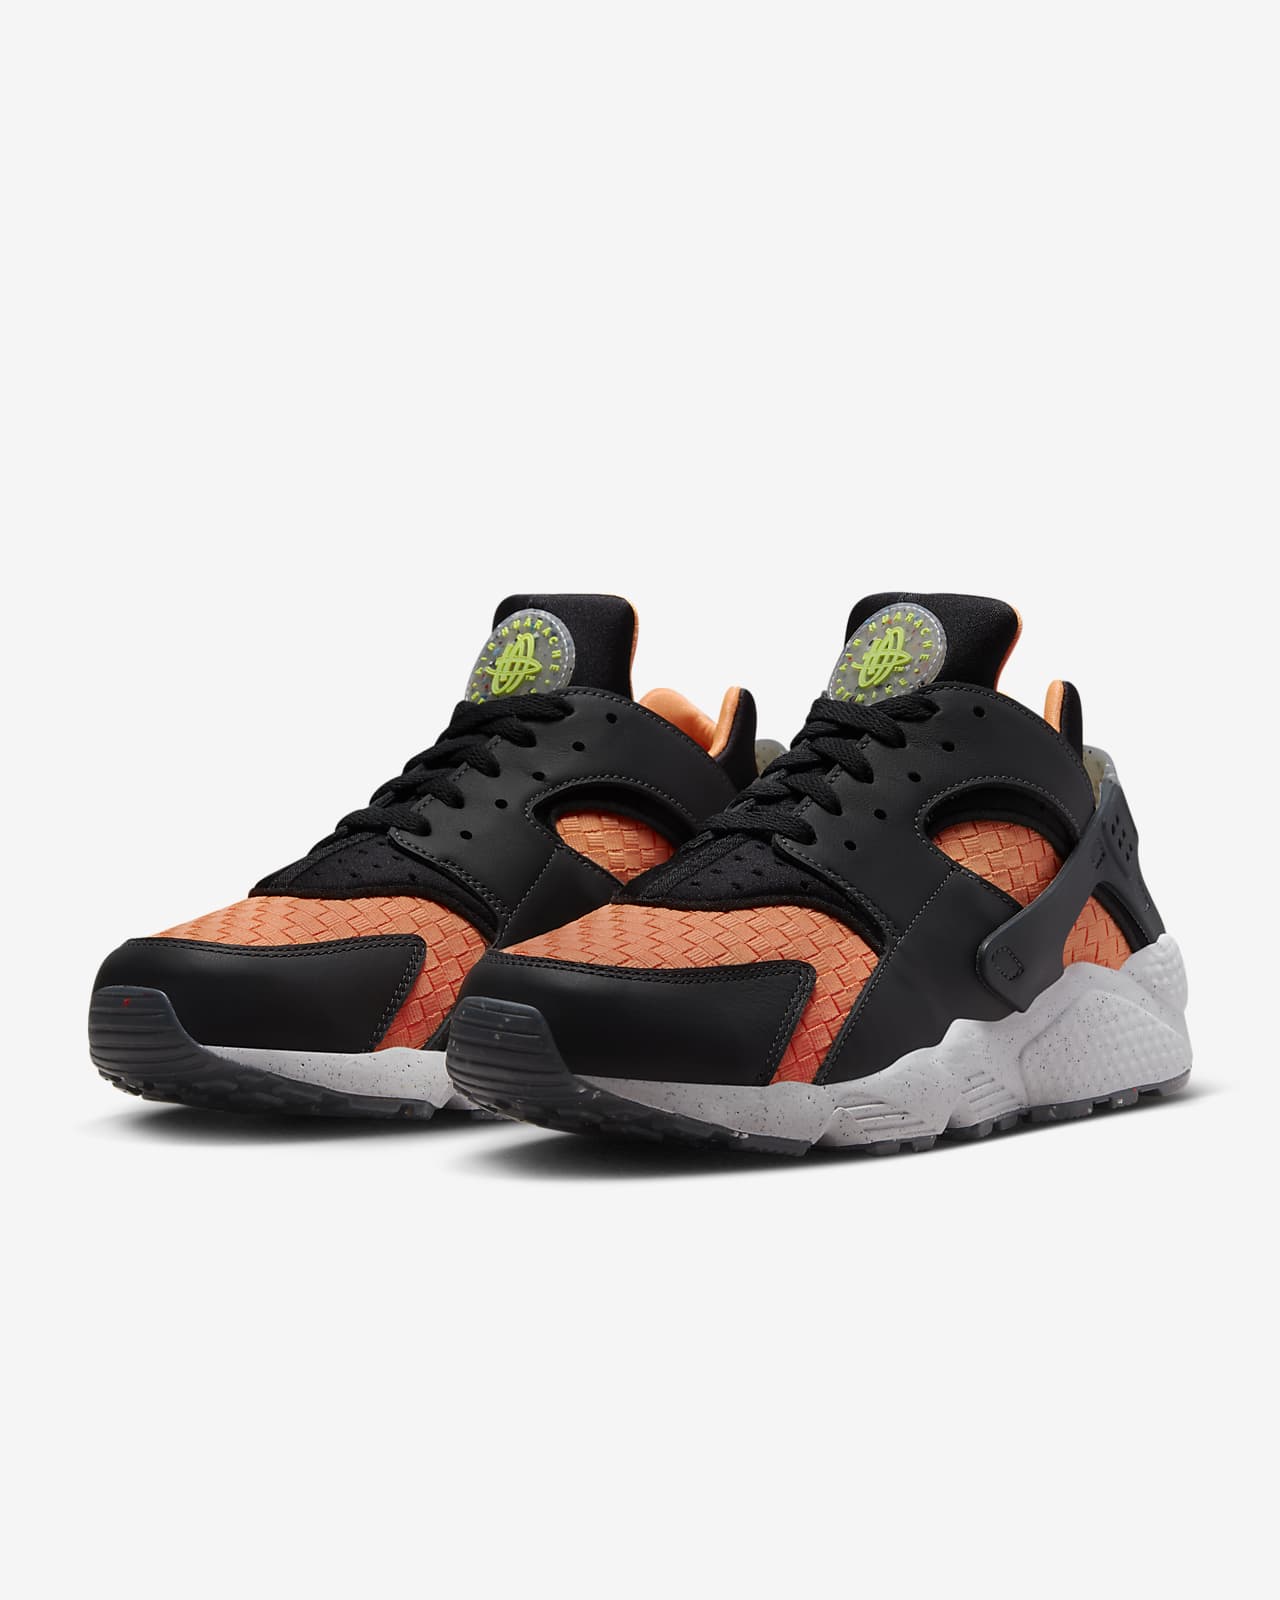 Nike Air Huarache Crater Premium Men's Shoes.